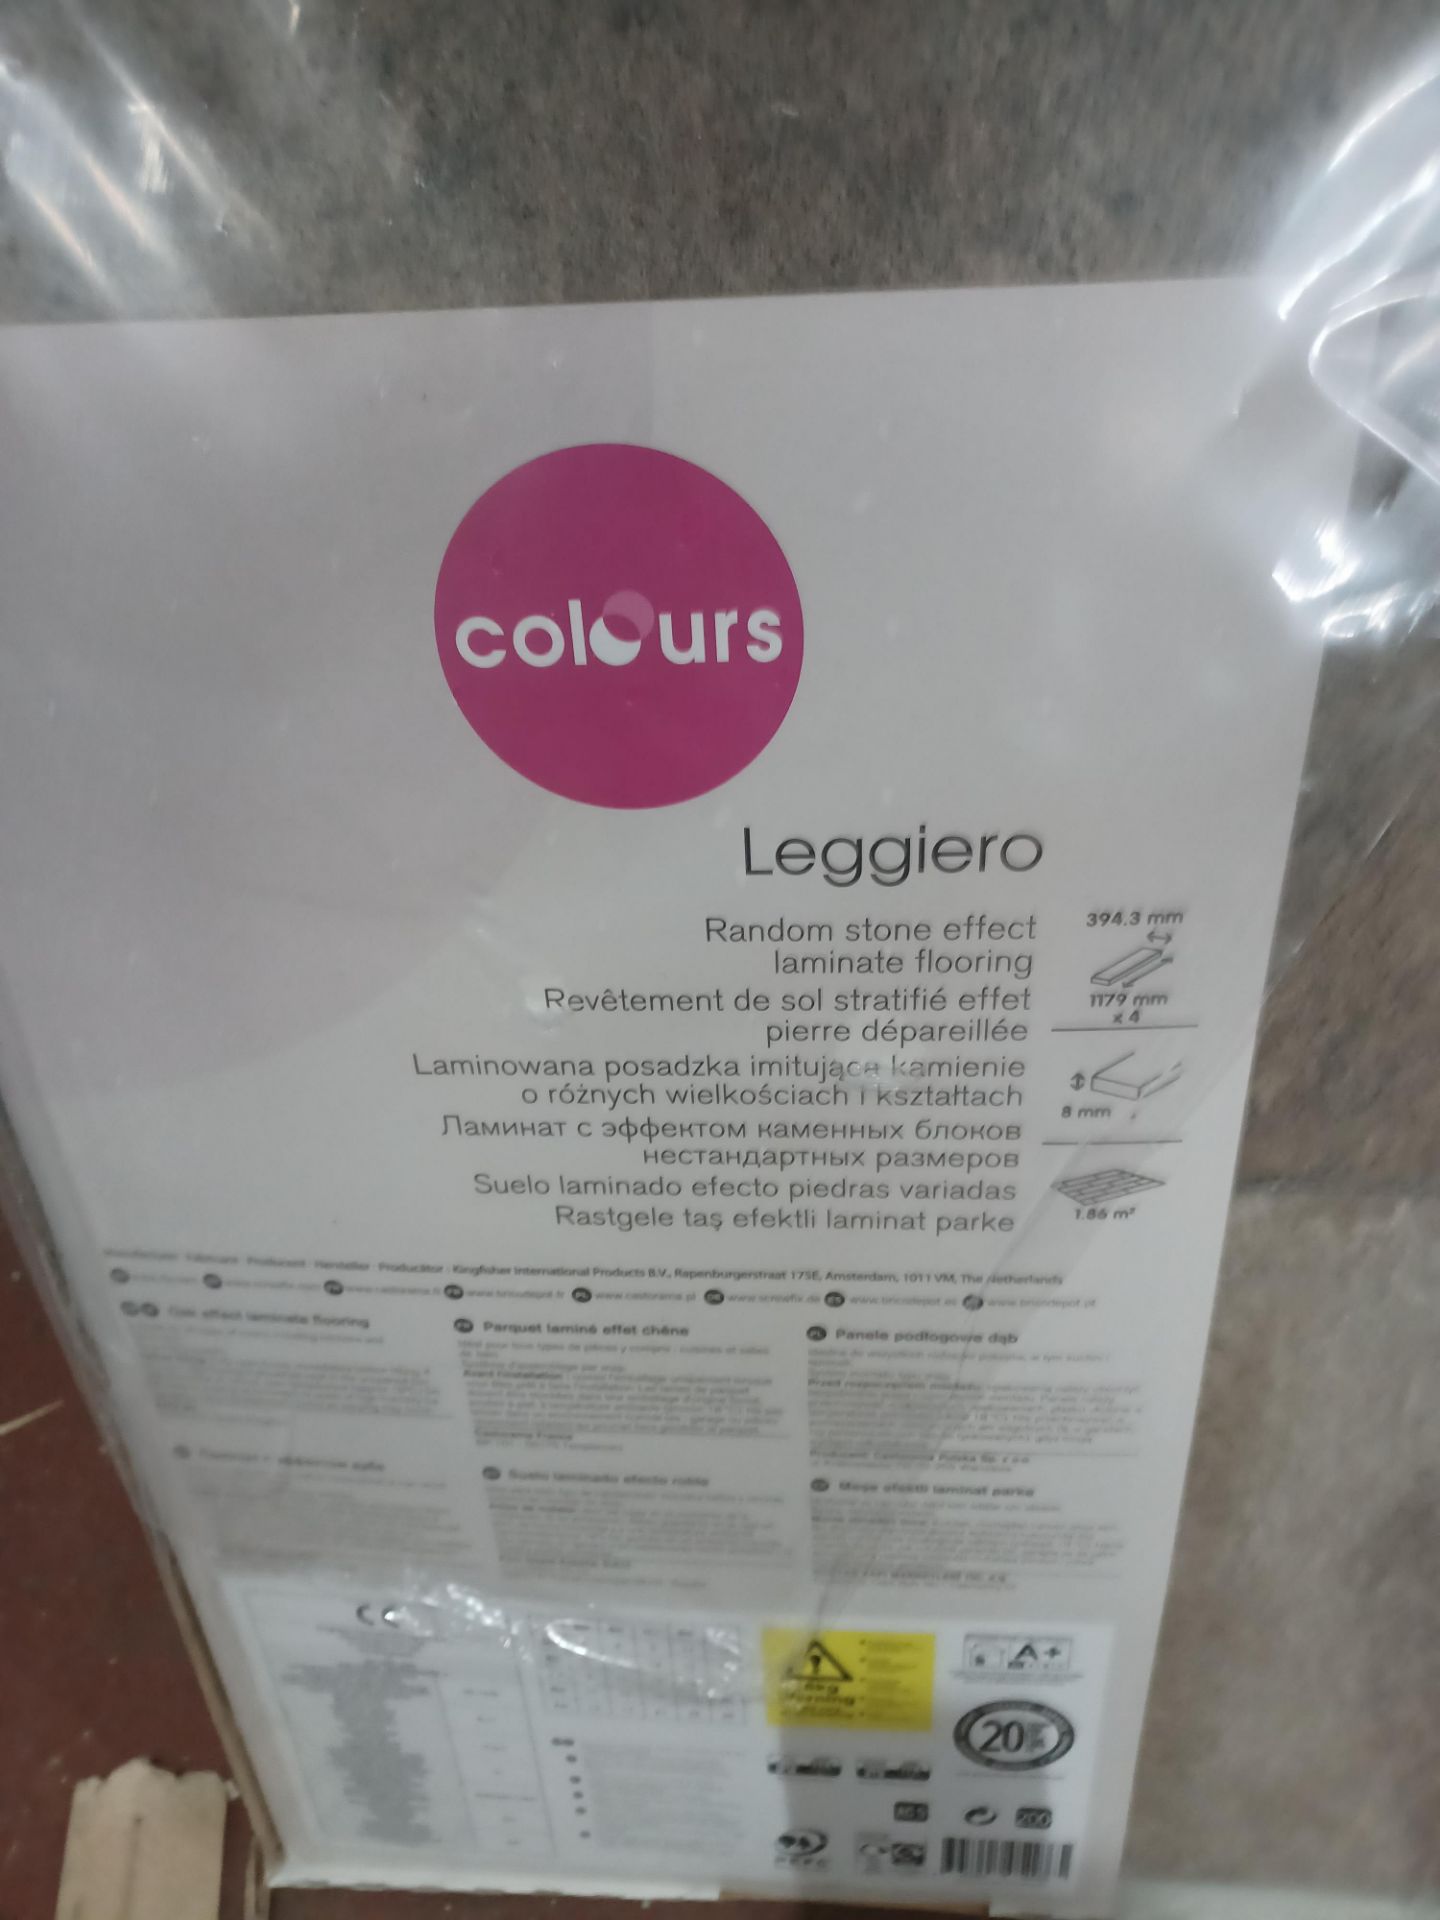 10 X PACKS OF Leggiero Light grey Slate effect Laminate Flooring, EACH PCK CONTAINS 1.86m², GIVING - Image 3 of 3